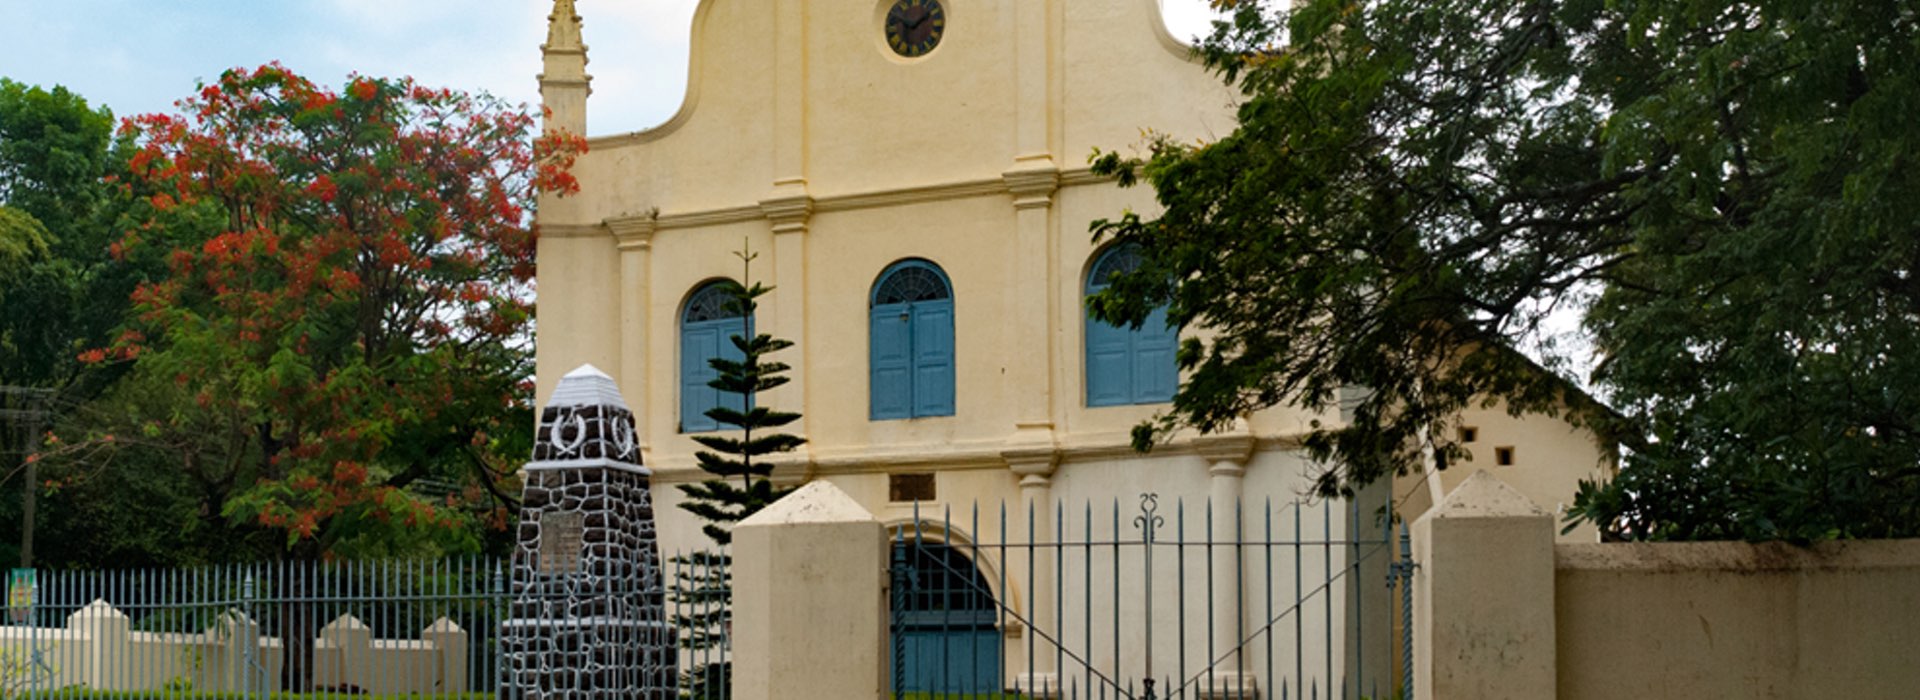 Saint Francis Church, Fort Kochi